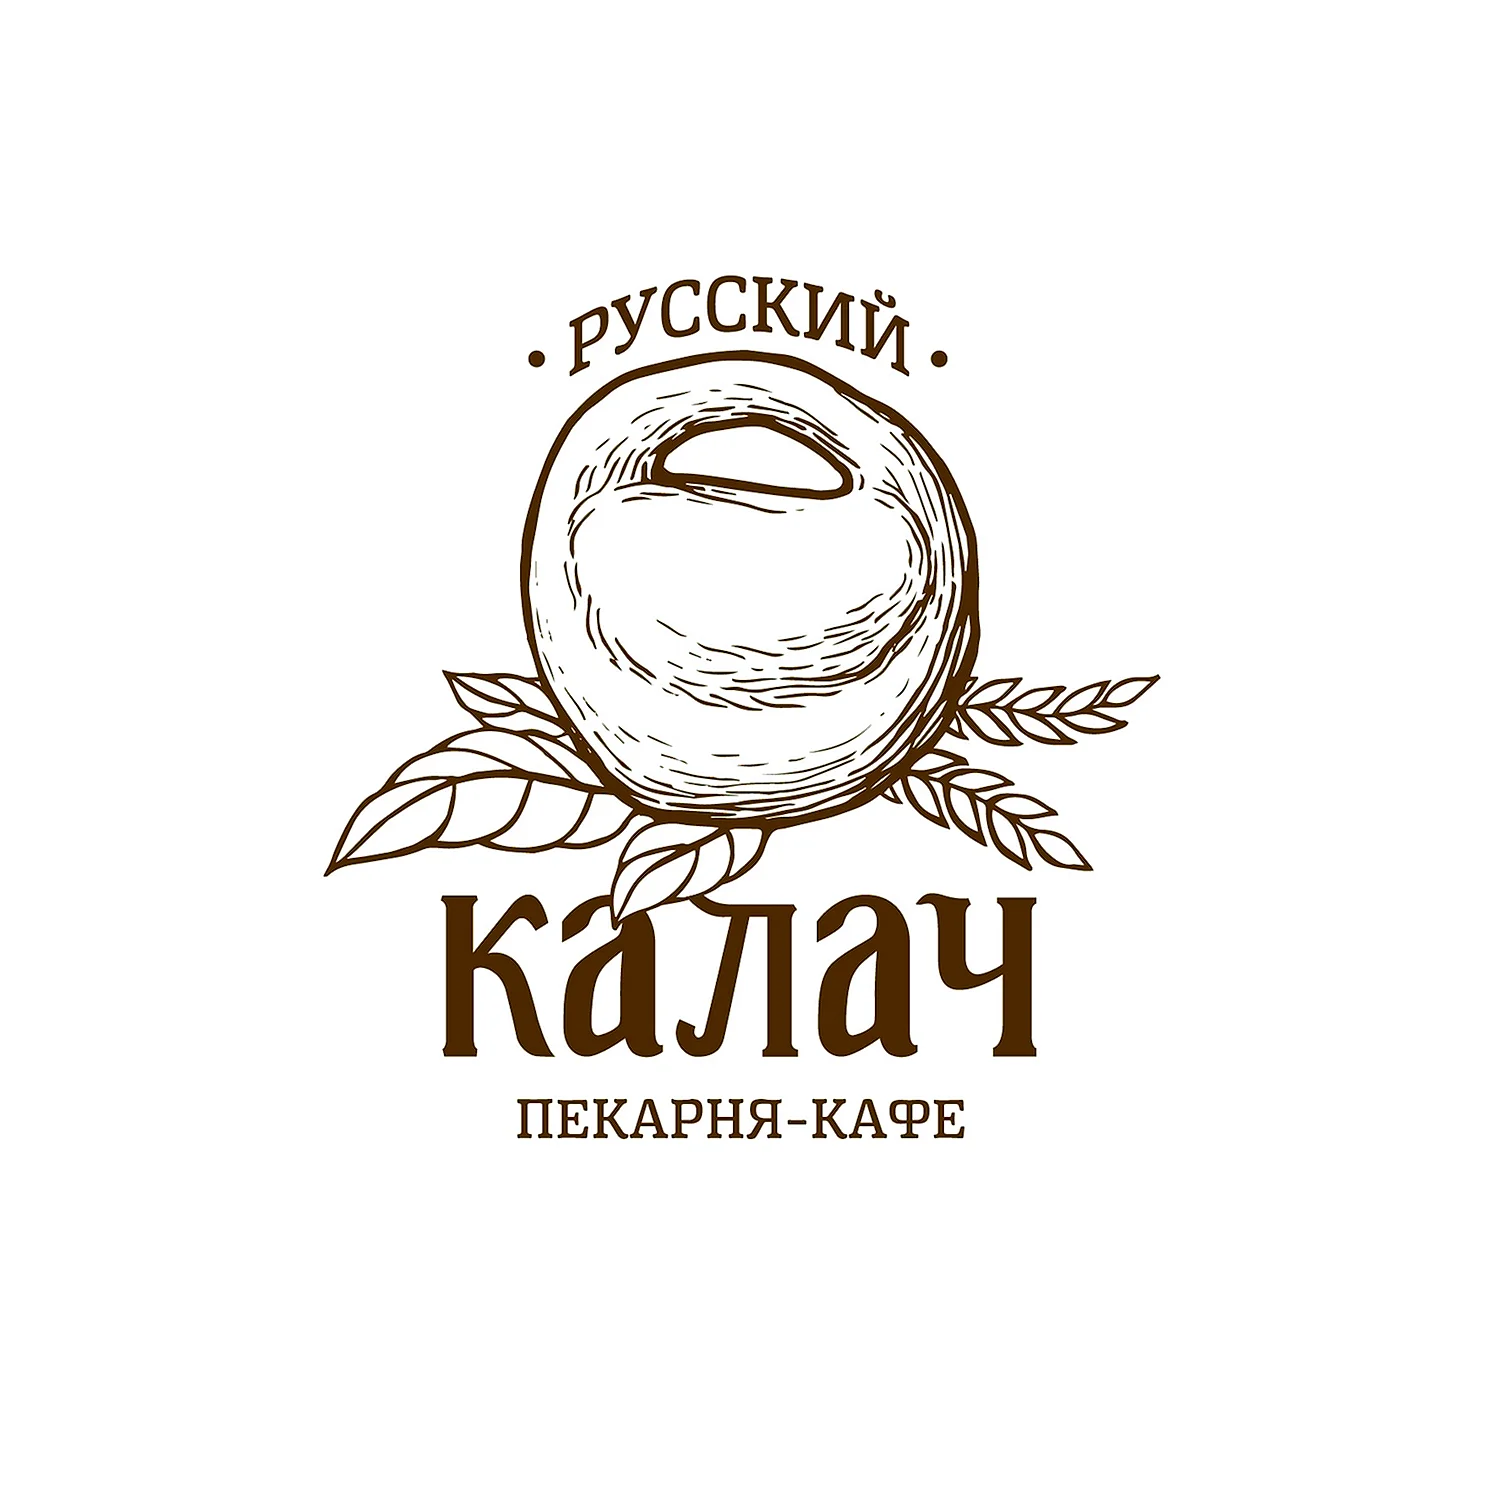 Калач пекарня-кафе лого